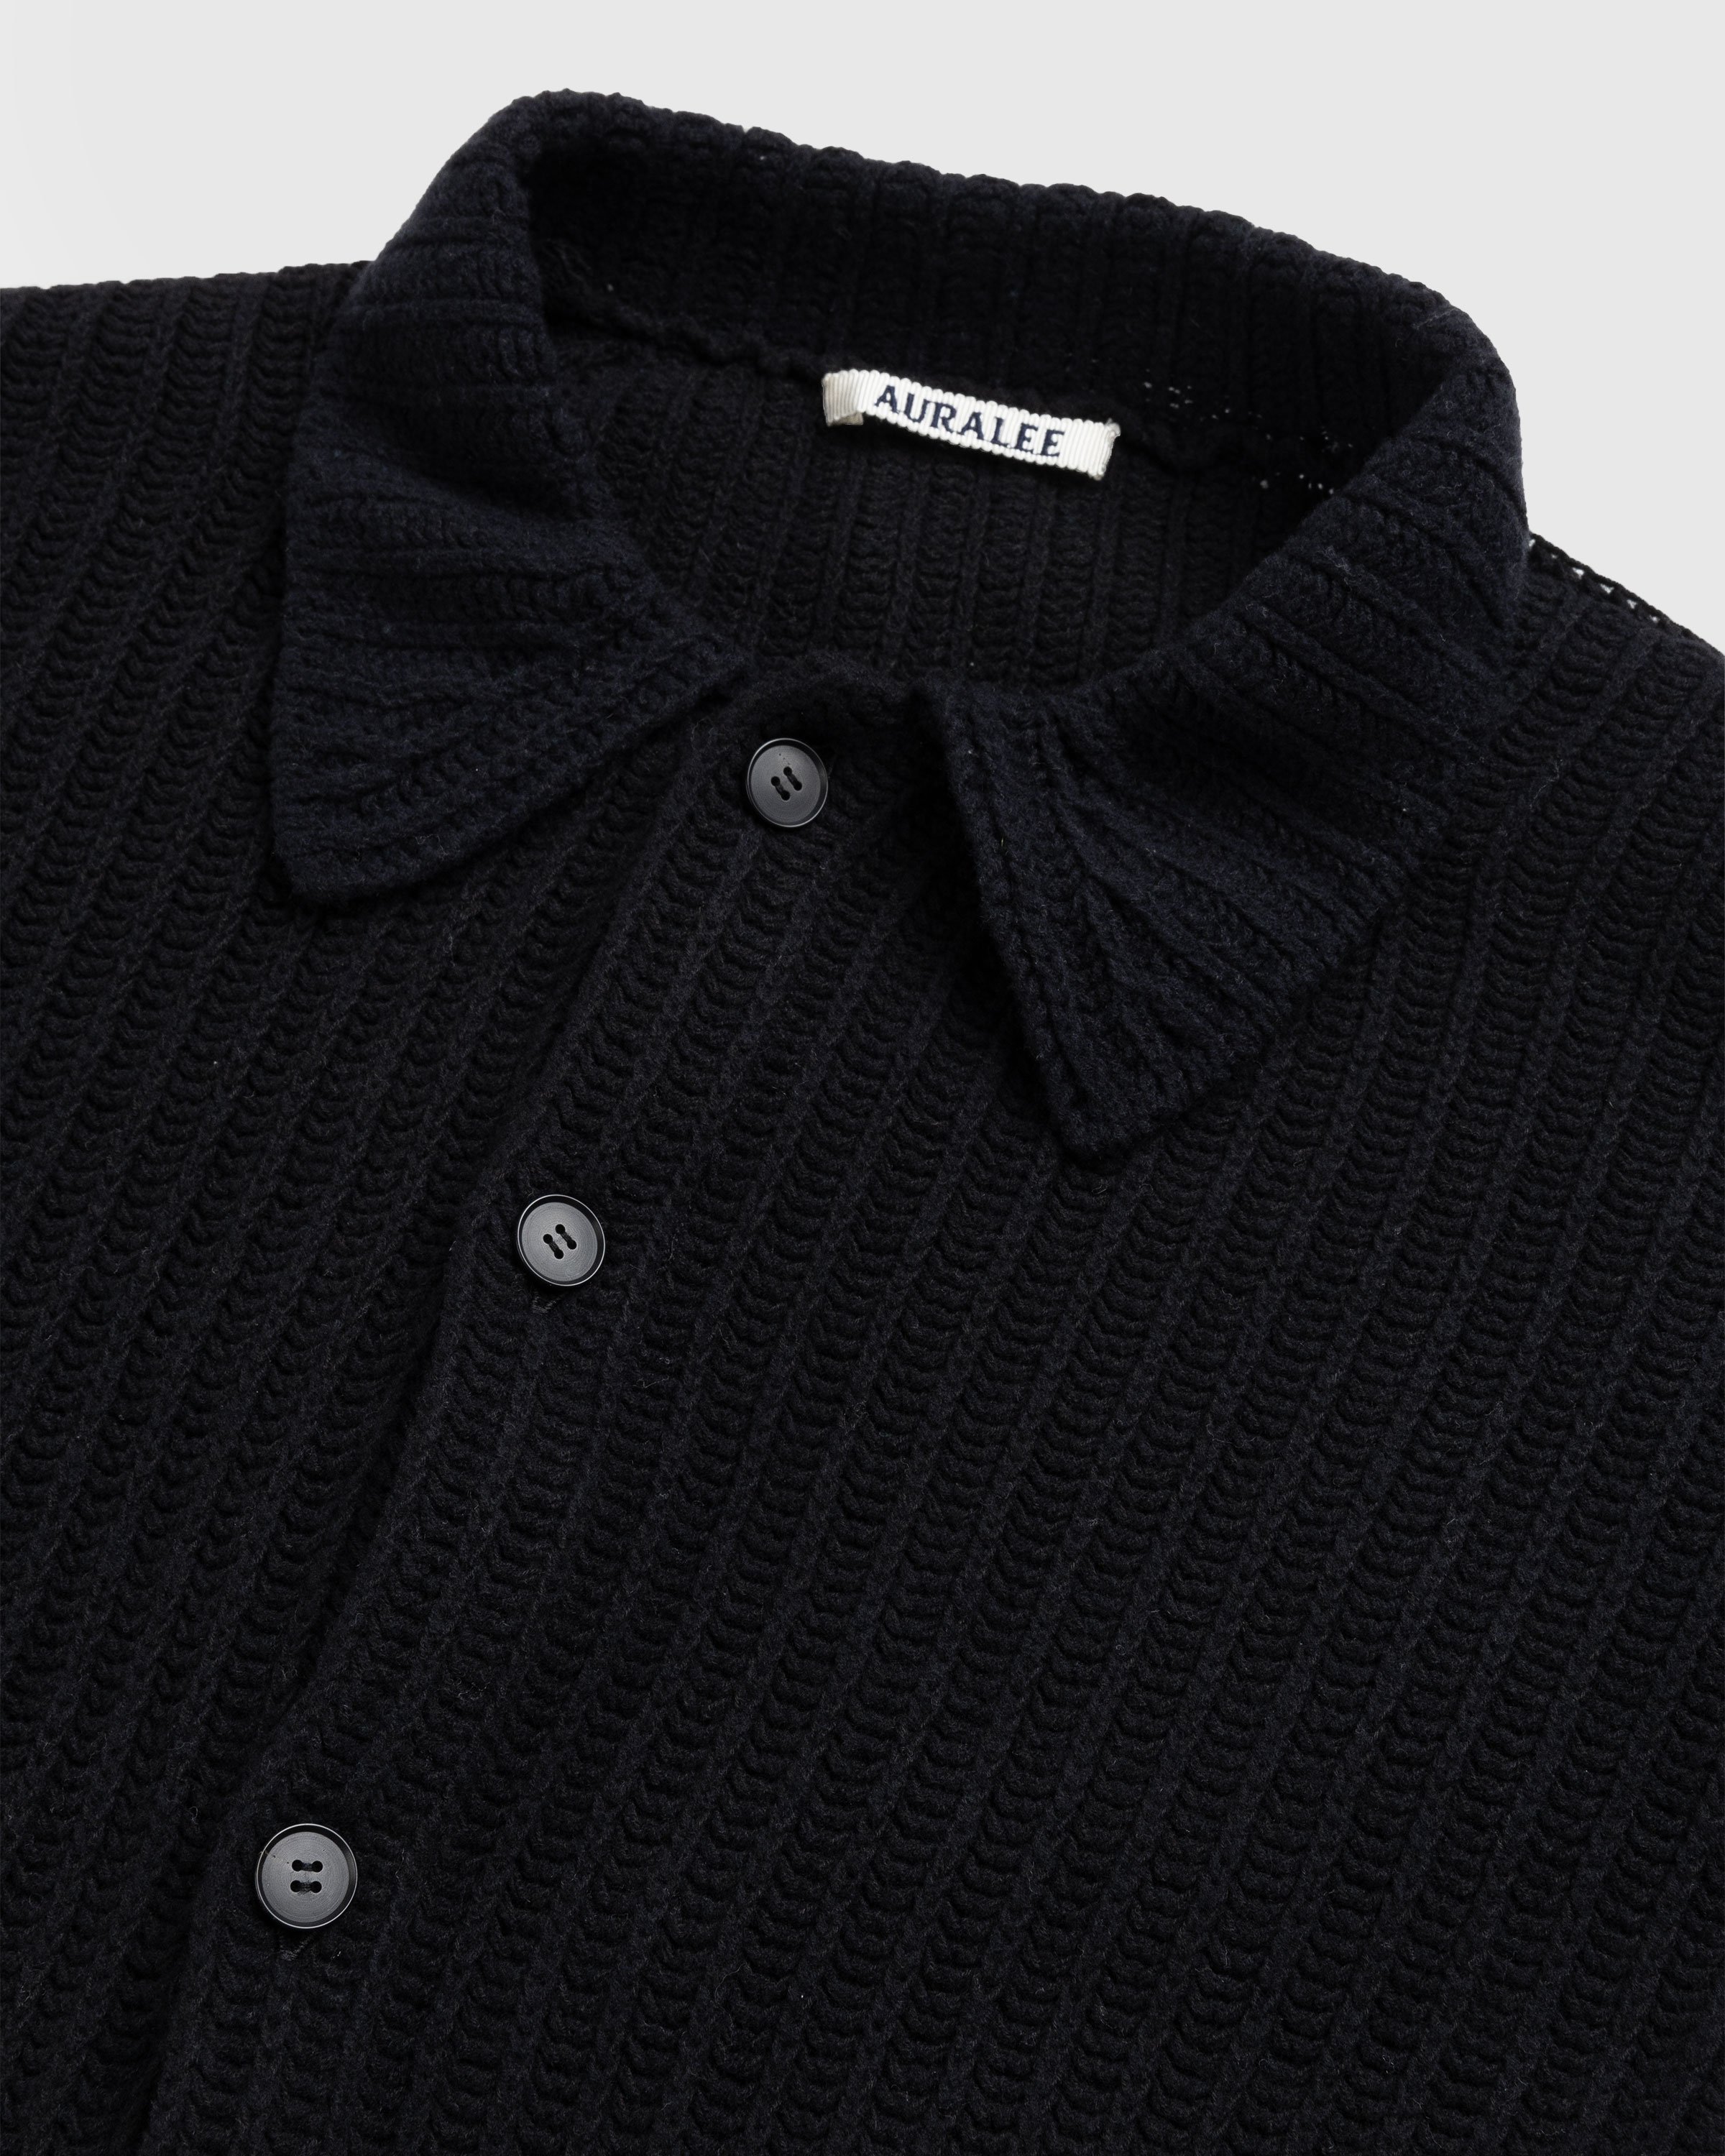 Auralee - Brushed Cotton Wool Rib Knit Shirt Black - Clothing - Black - Image 6